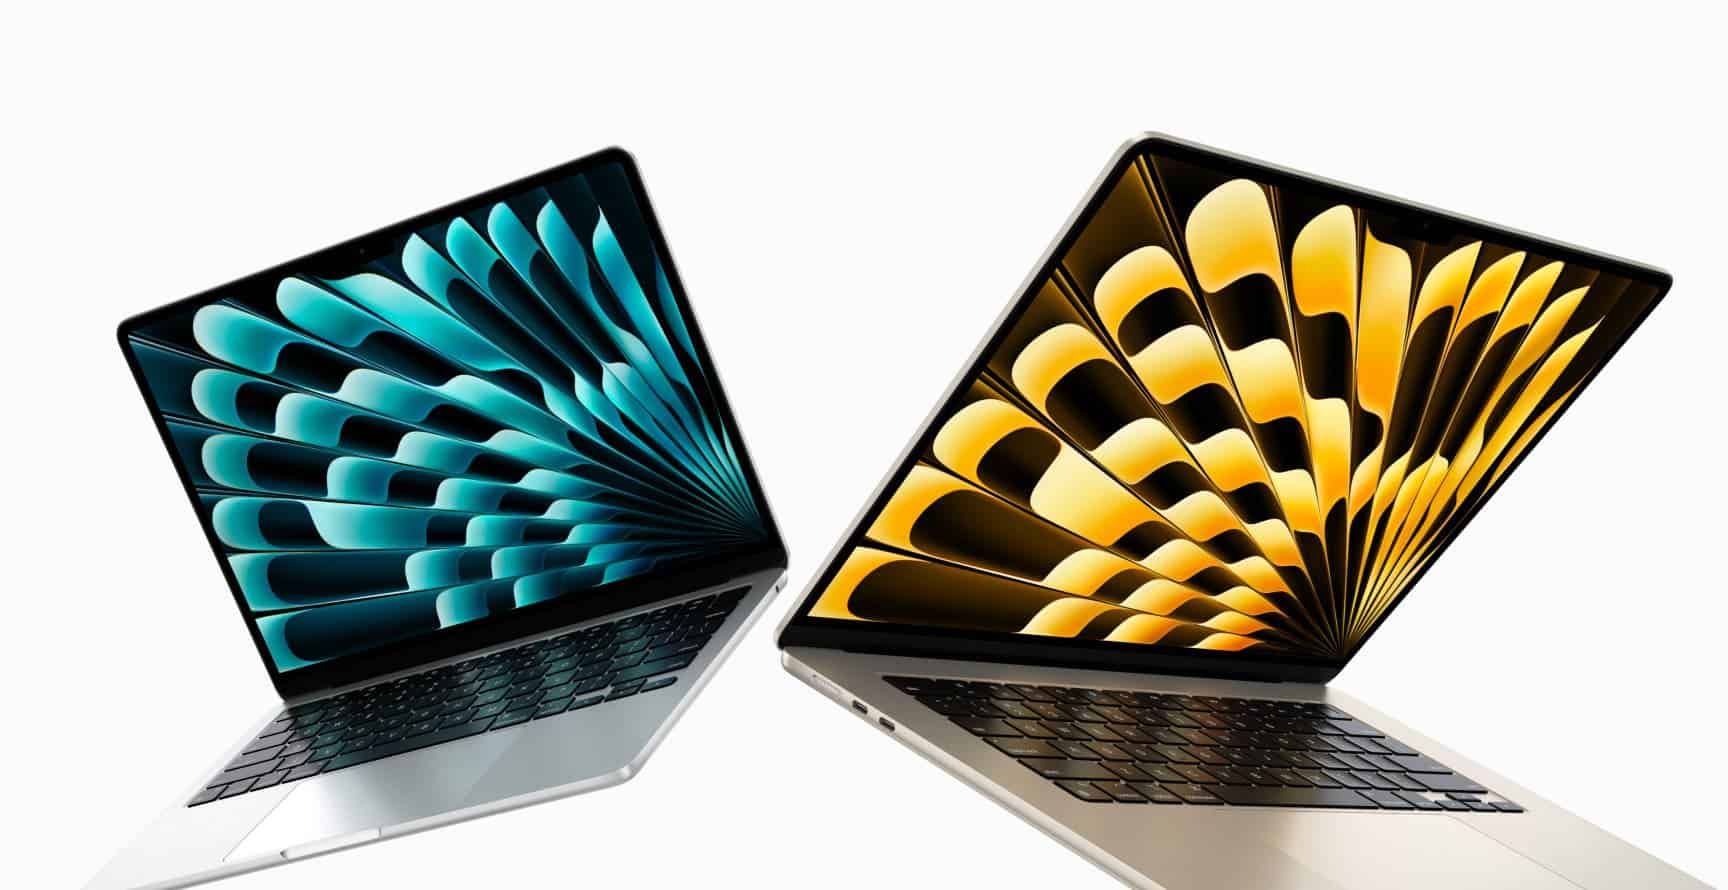 Larger 15-Inch MacBook Air Expected in 2023 - MacRumors